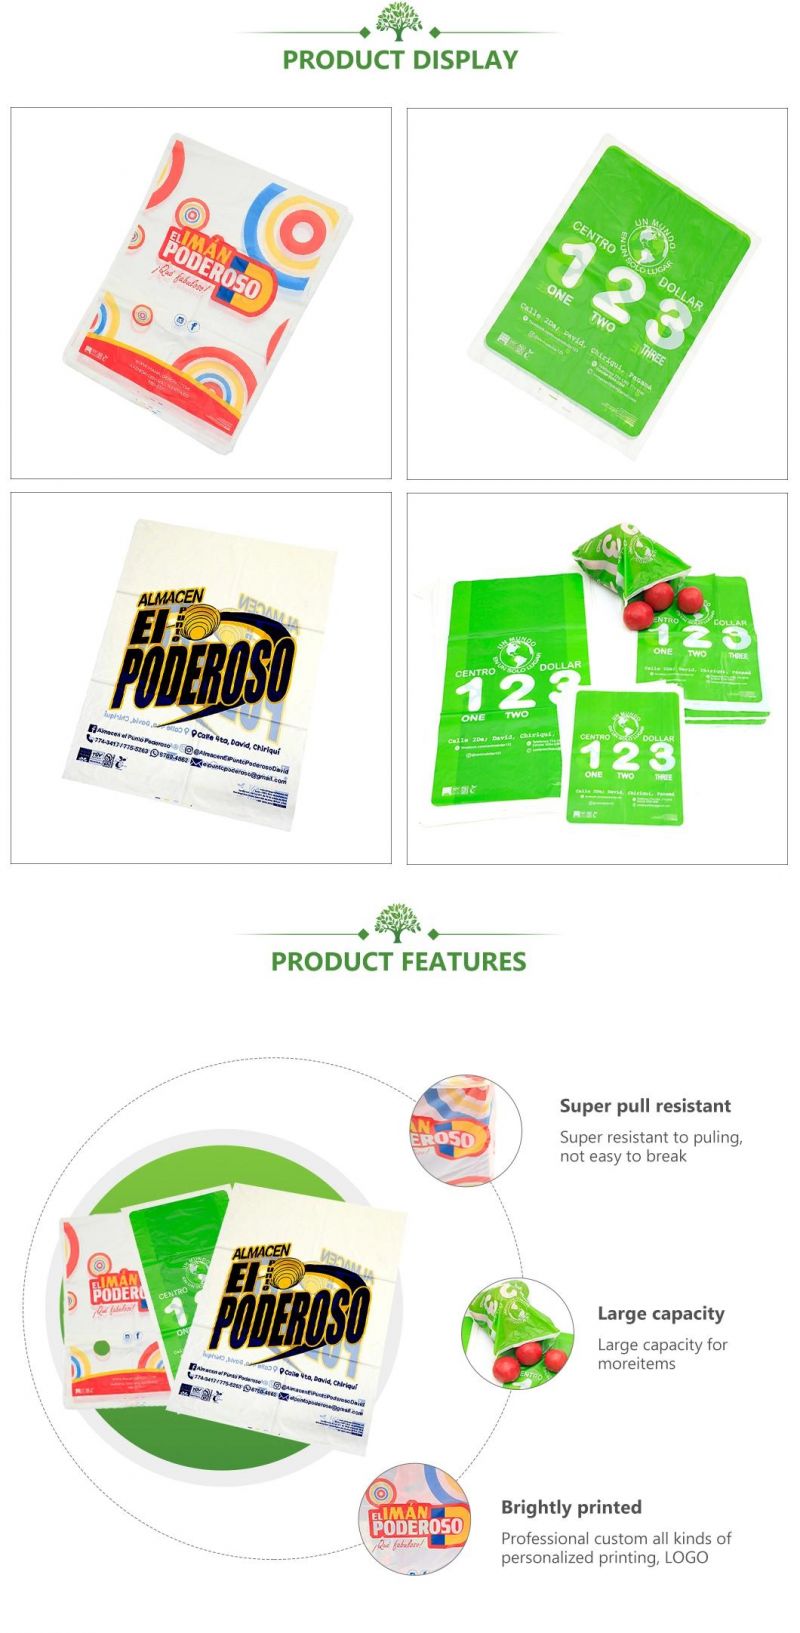 PLA+Pbat/Pbat+Corn Starch Biodegradable Bags, Compostable Bags, Food Bags for School